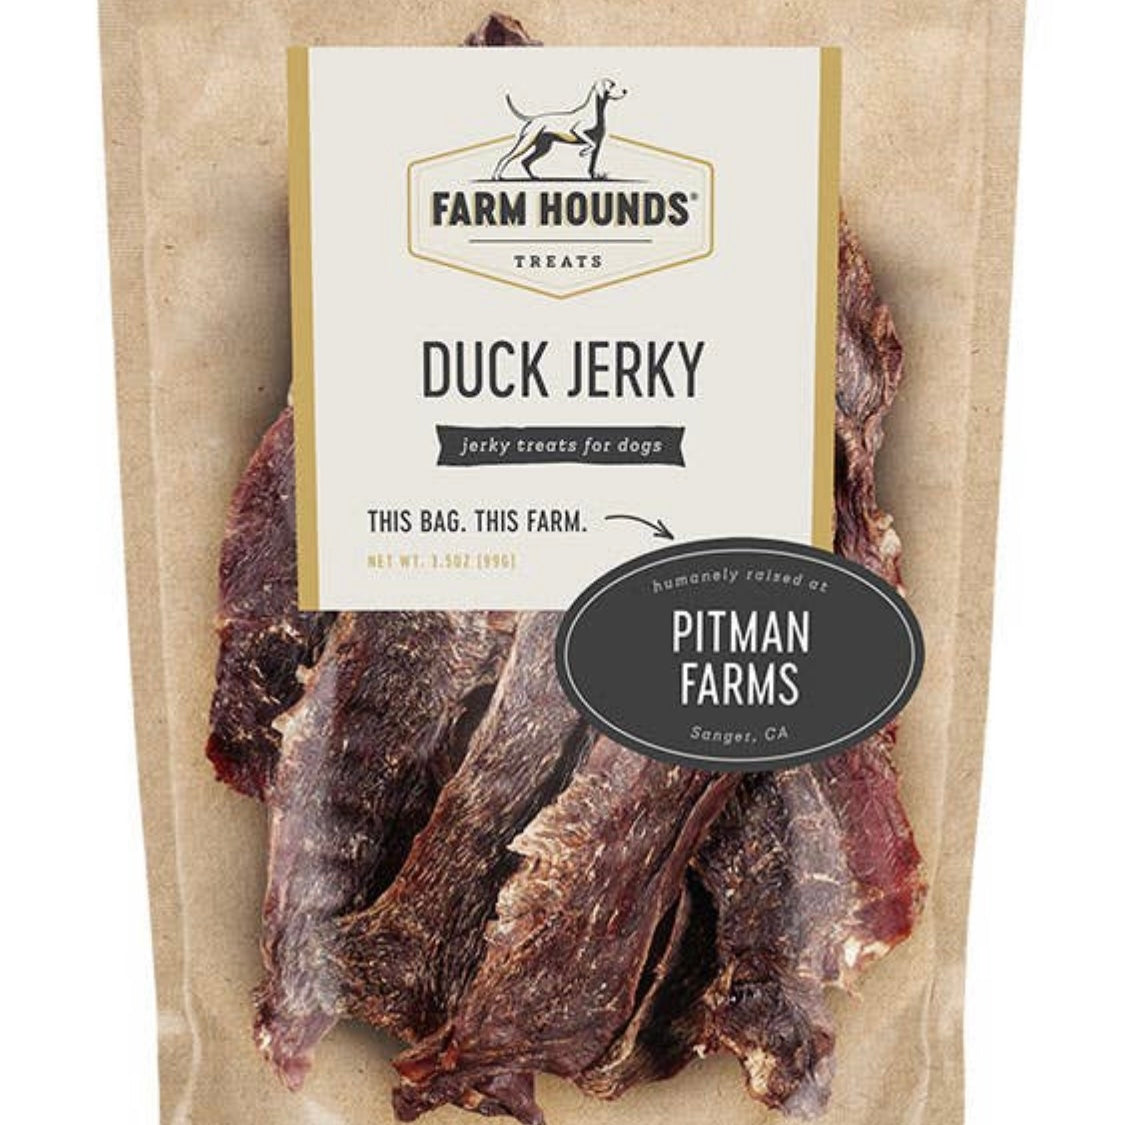 Farm Hounds Jerky